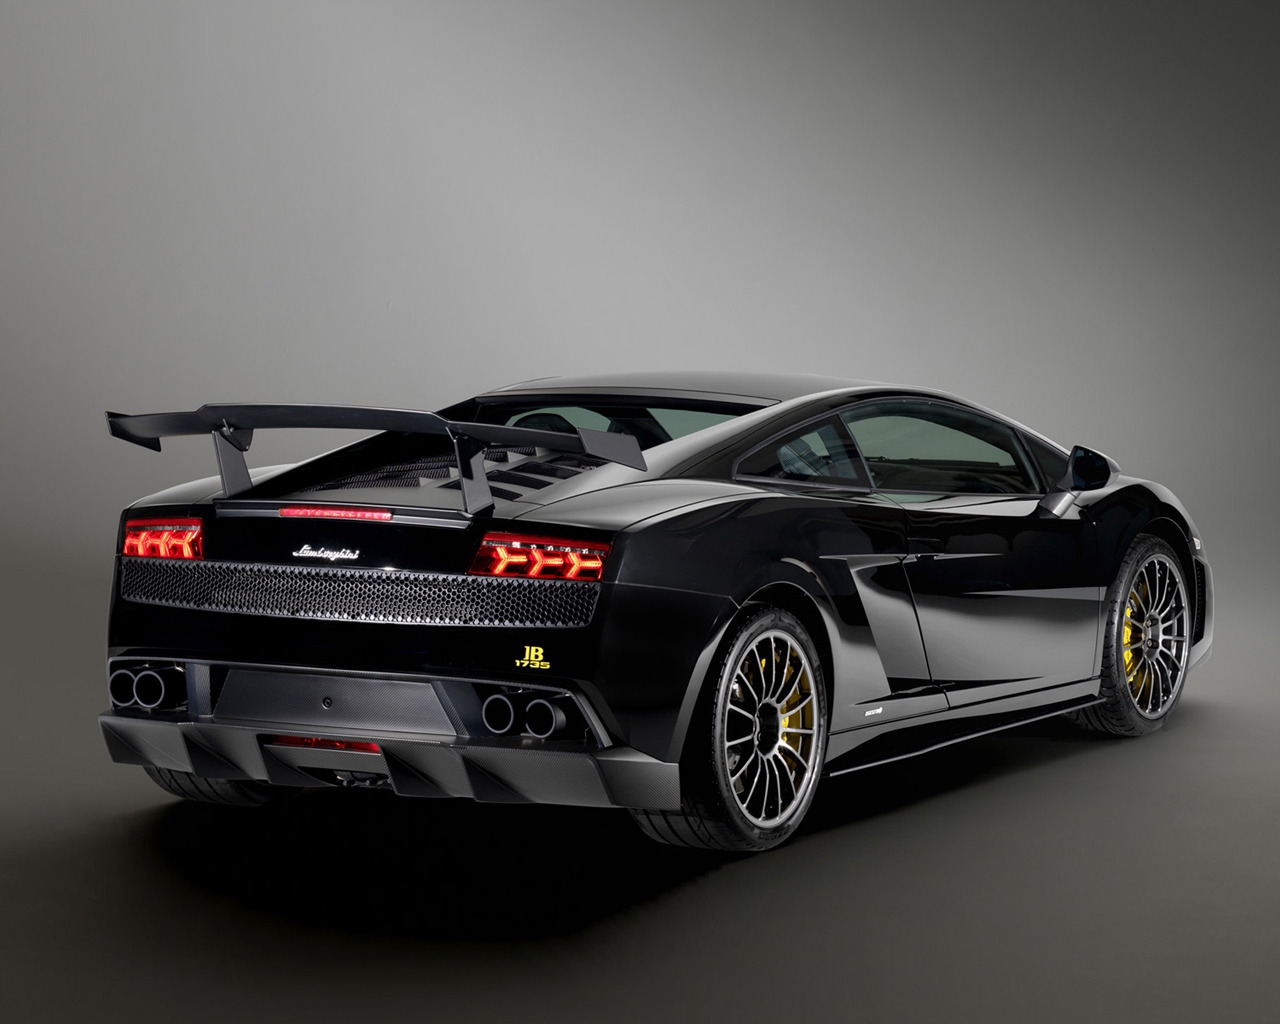 Lamborghini Gallardo LP570 2011 for 1280 x 1024 resolution